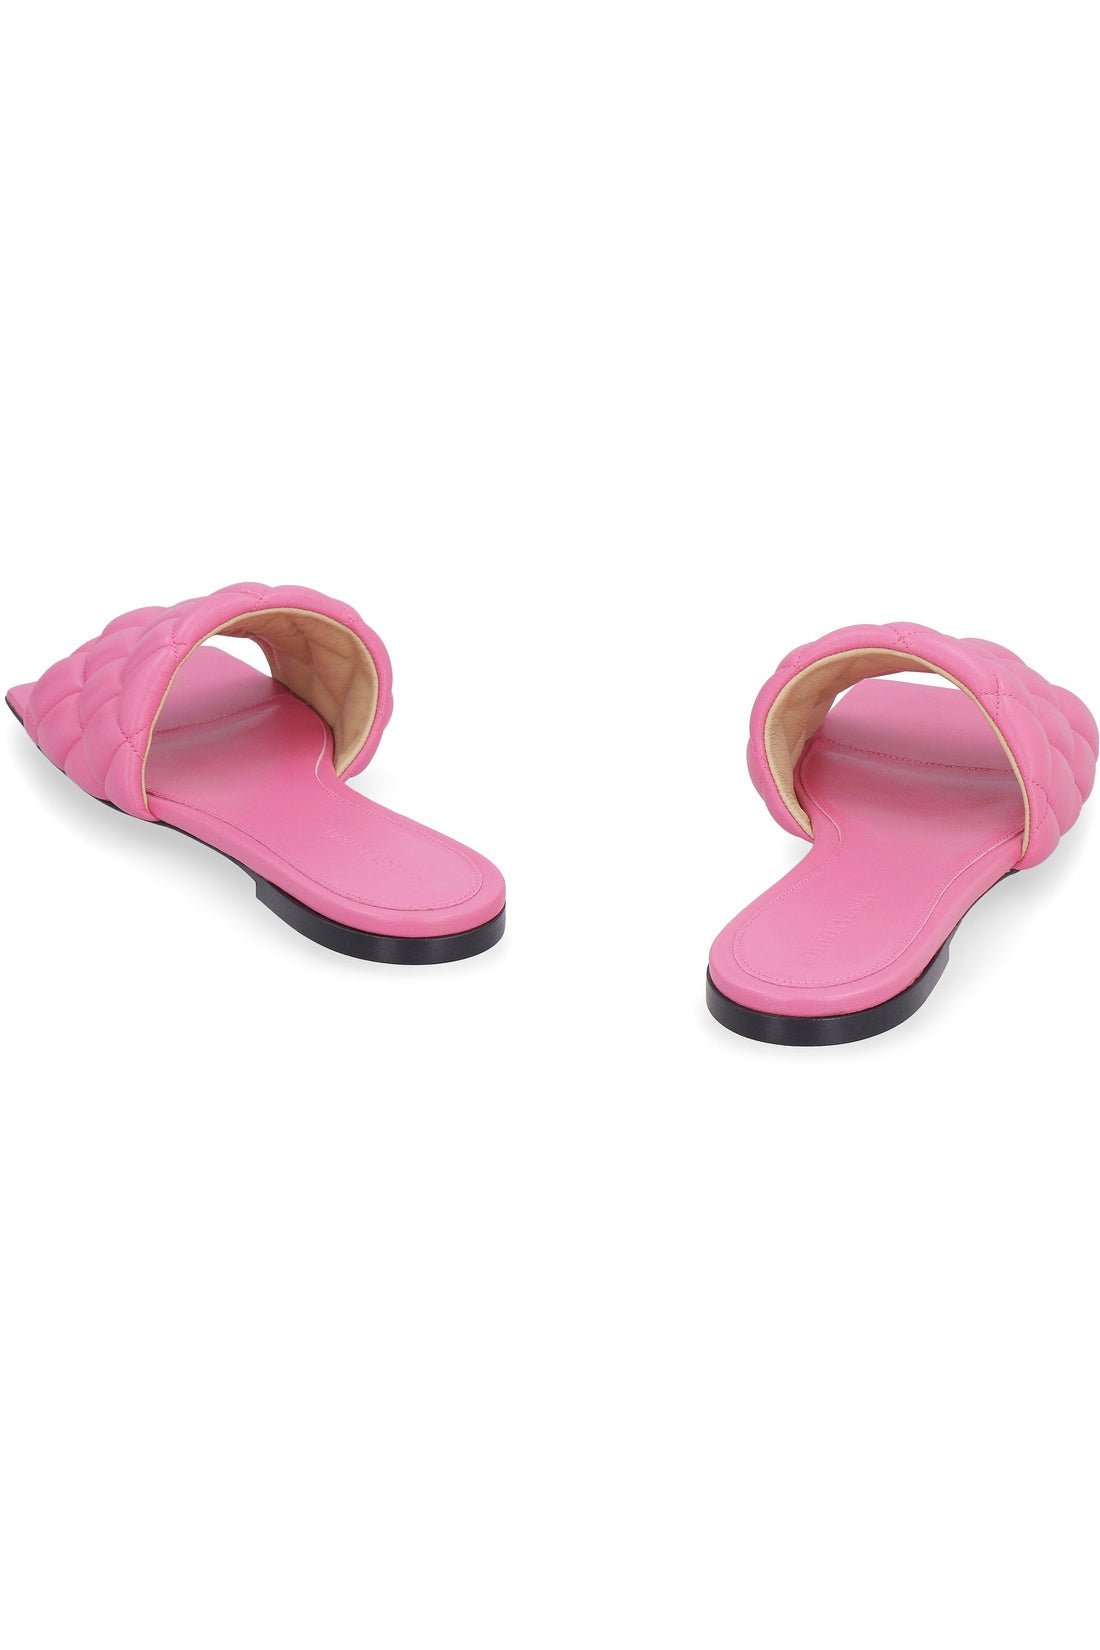 Bottega Veneta-OUTLET-SALE-Flat Padded sandals-ARCHIVIST